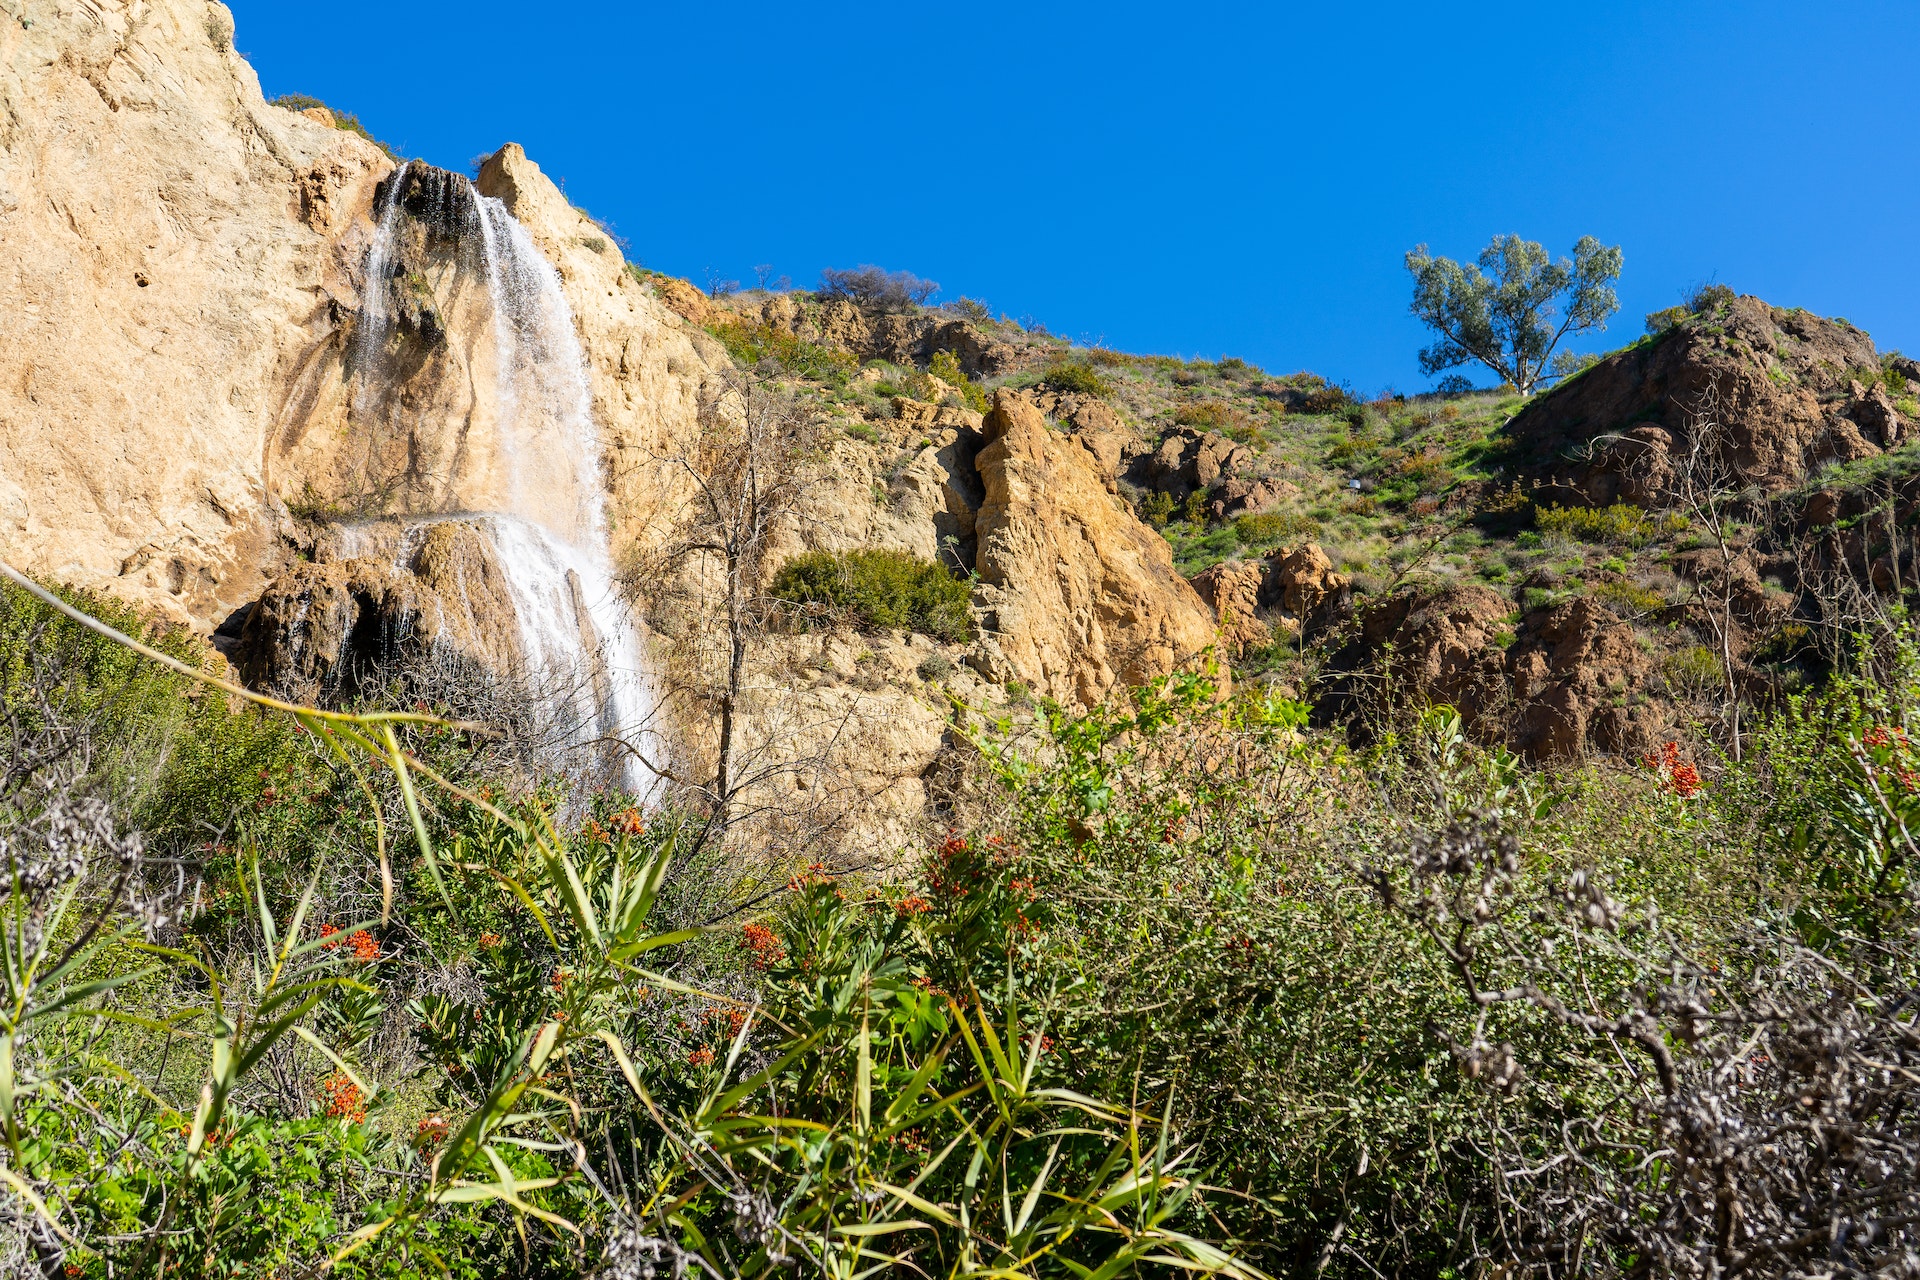 A views of Escondido Falls after a heavy rainfall, Malibu, California, USA